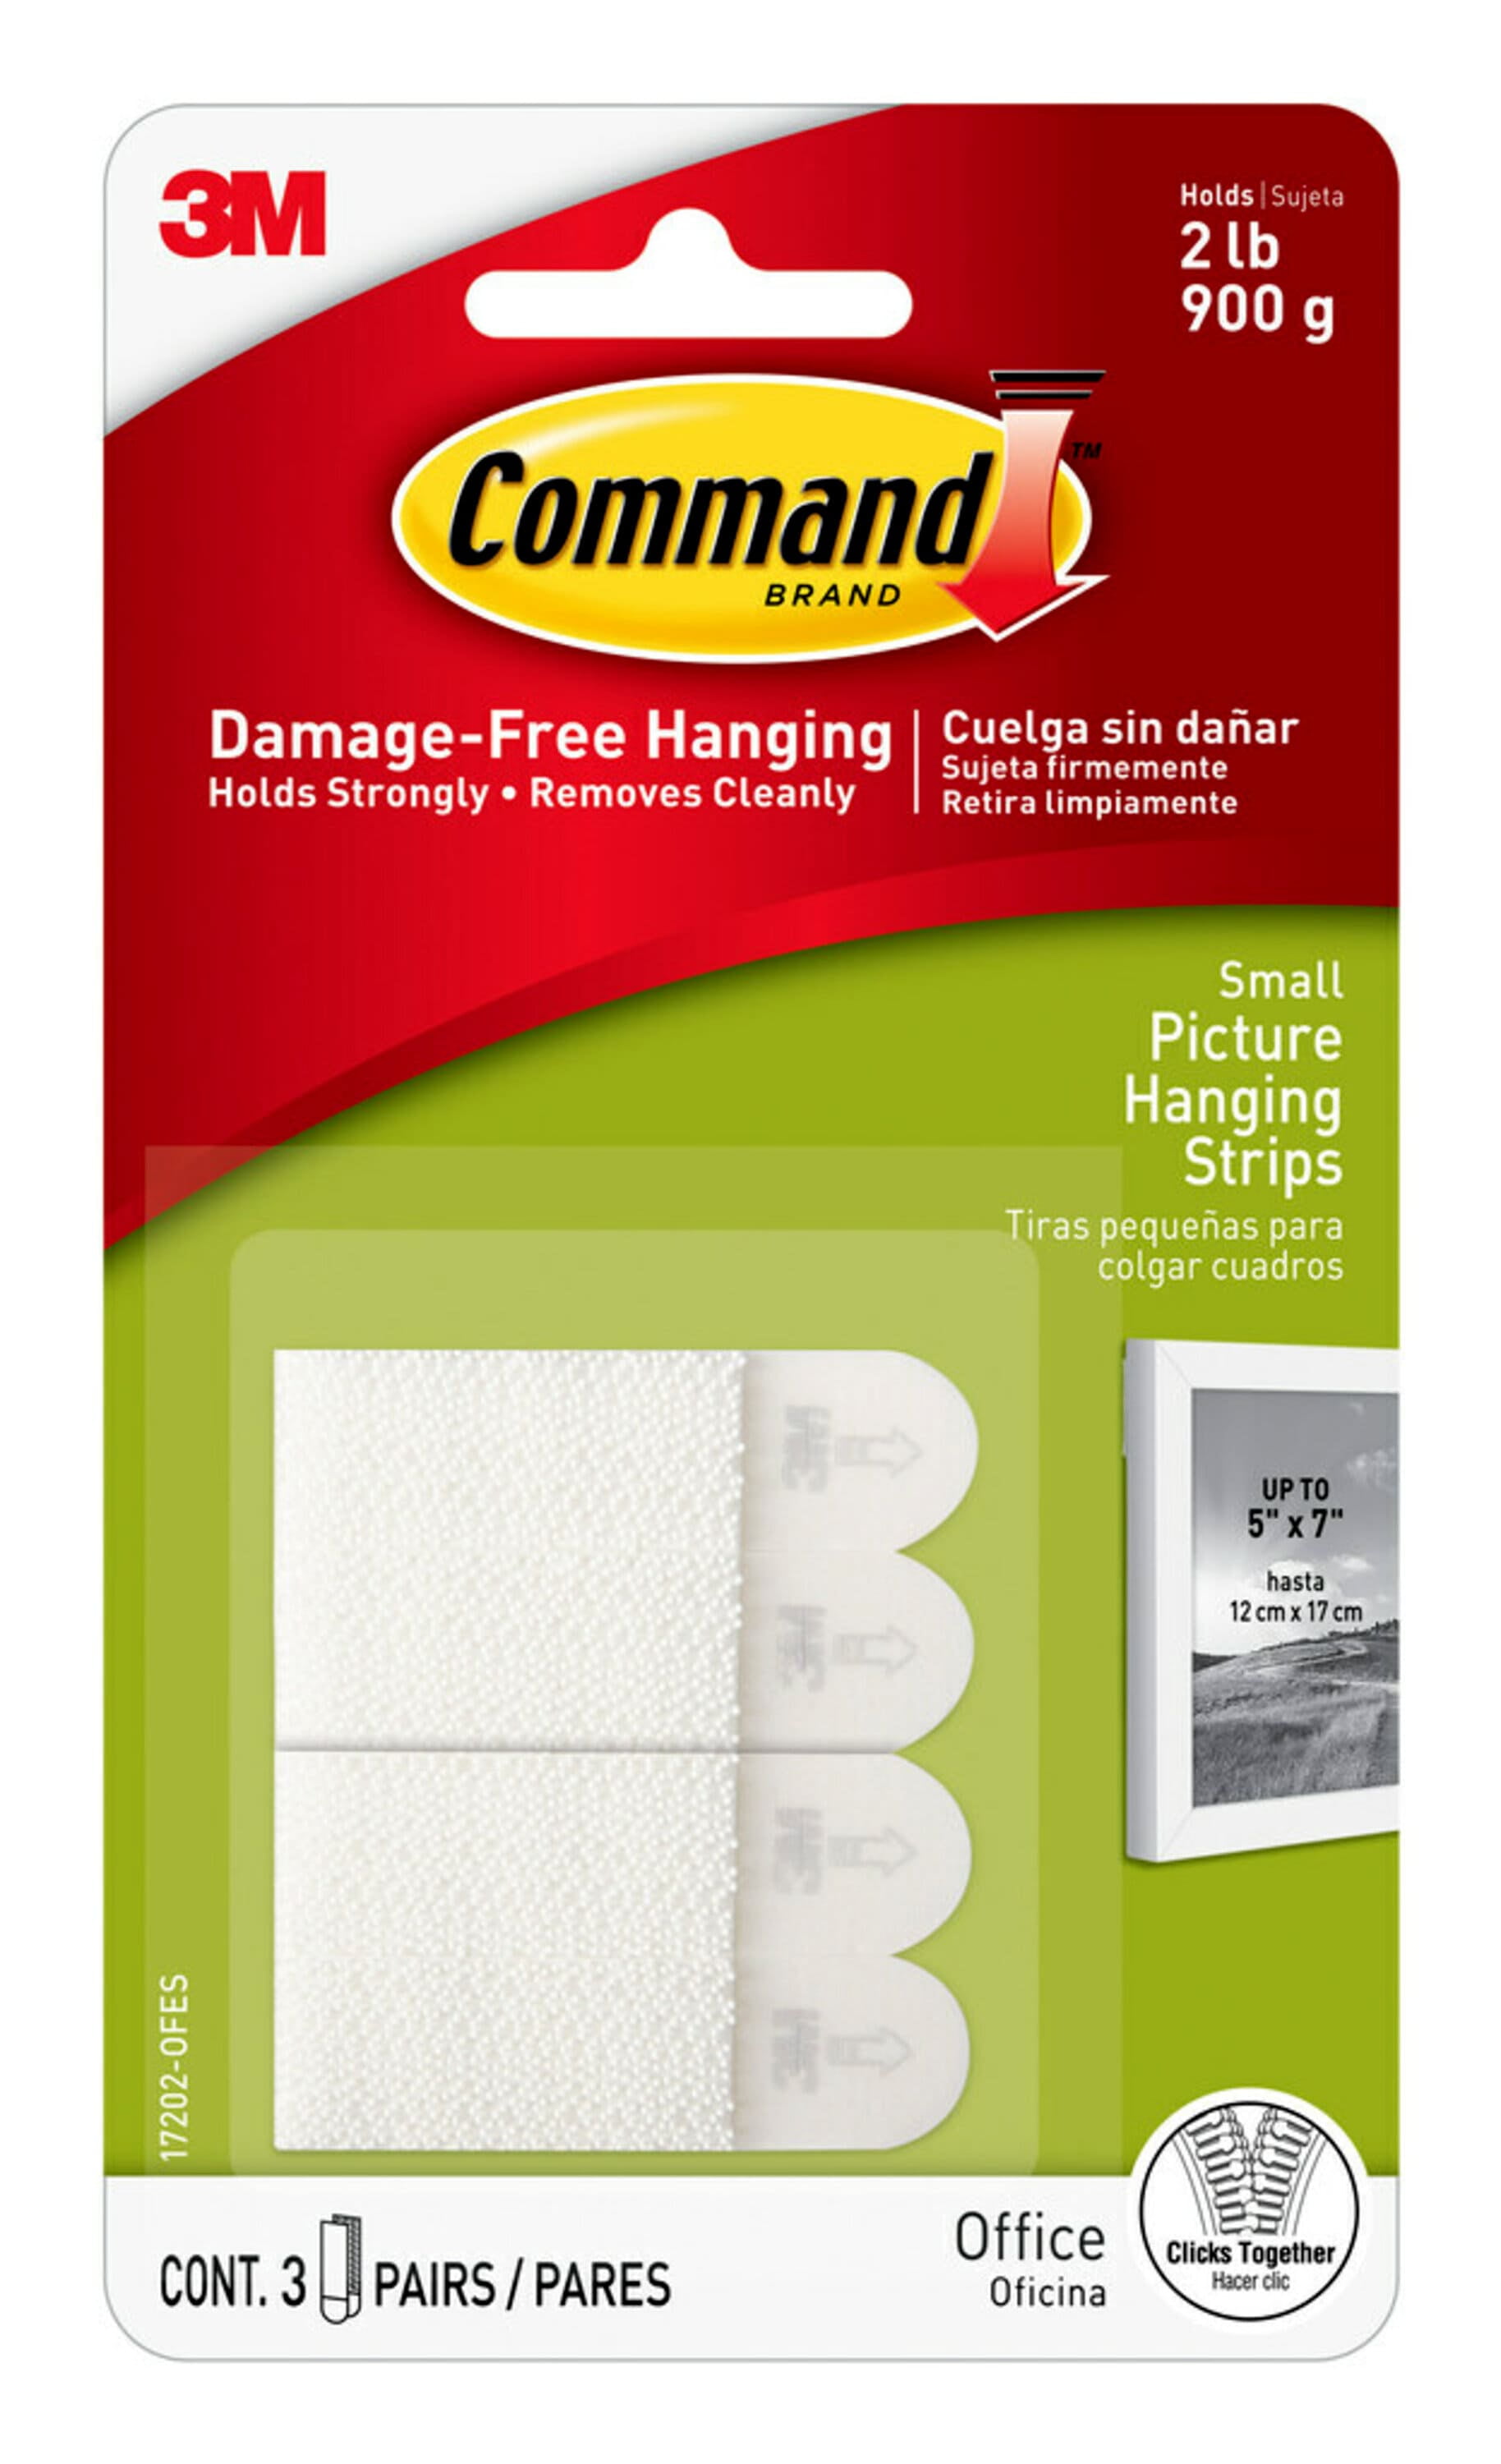 3M Comand Hanging Strips Large Adhesive Damage Free Picture Poster Frames DIY 